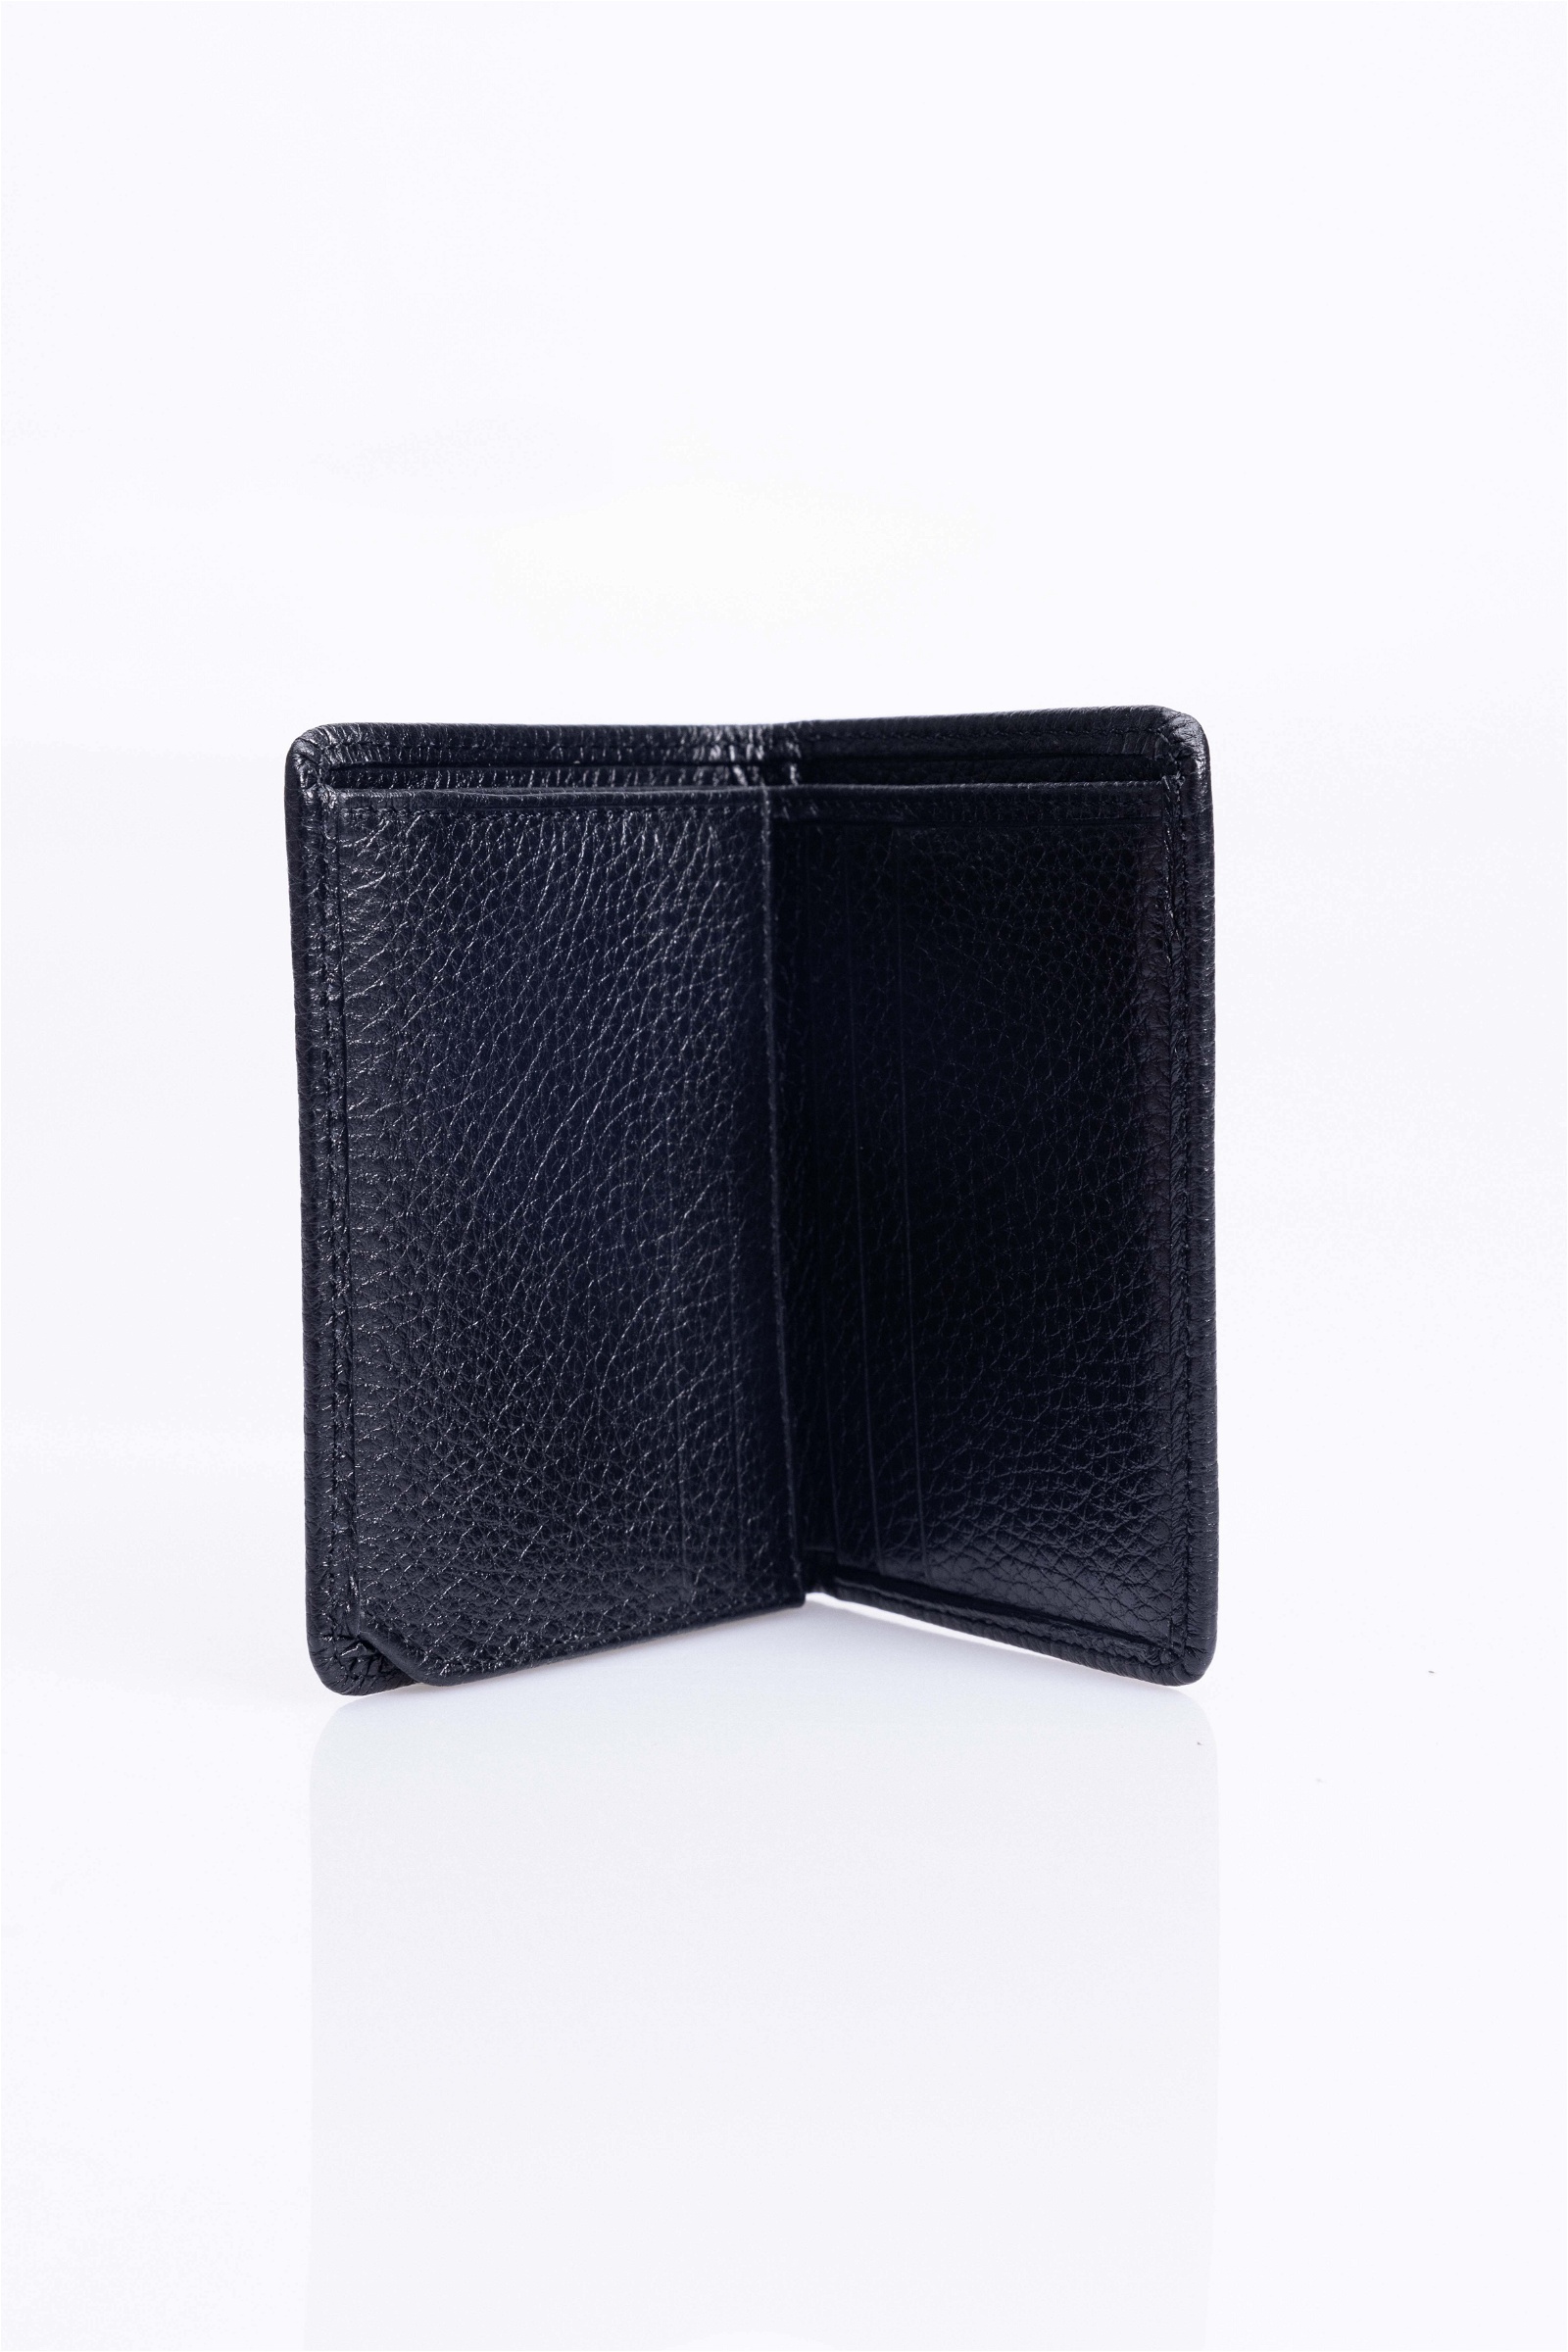 Leather Black Wallet